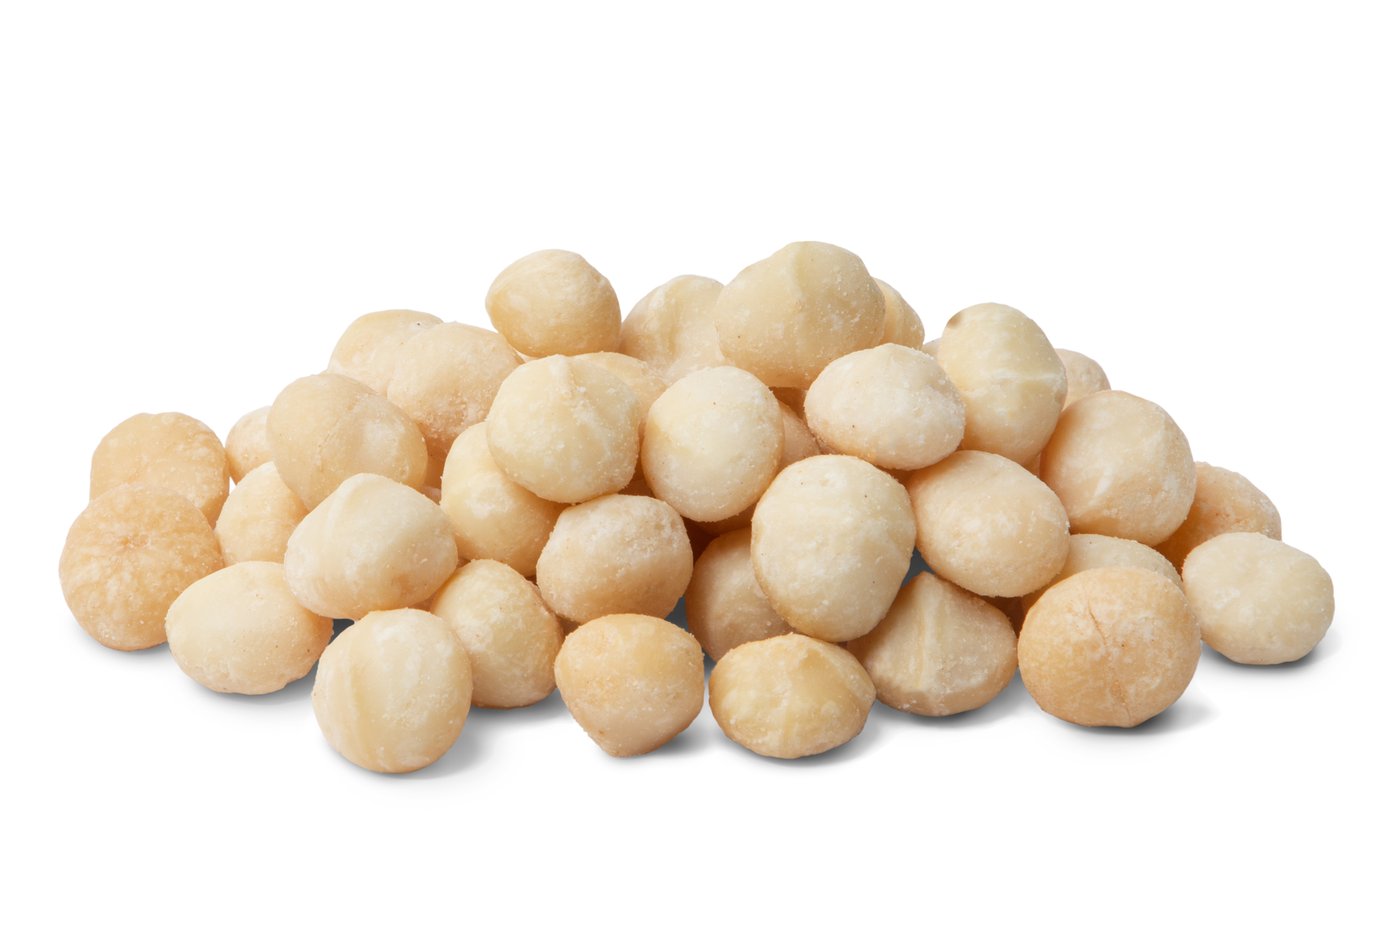 Roasted Macadamia Nuts (Unsalted) photo